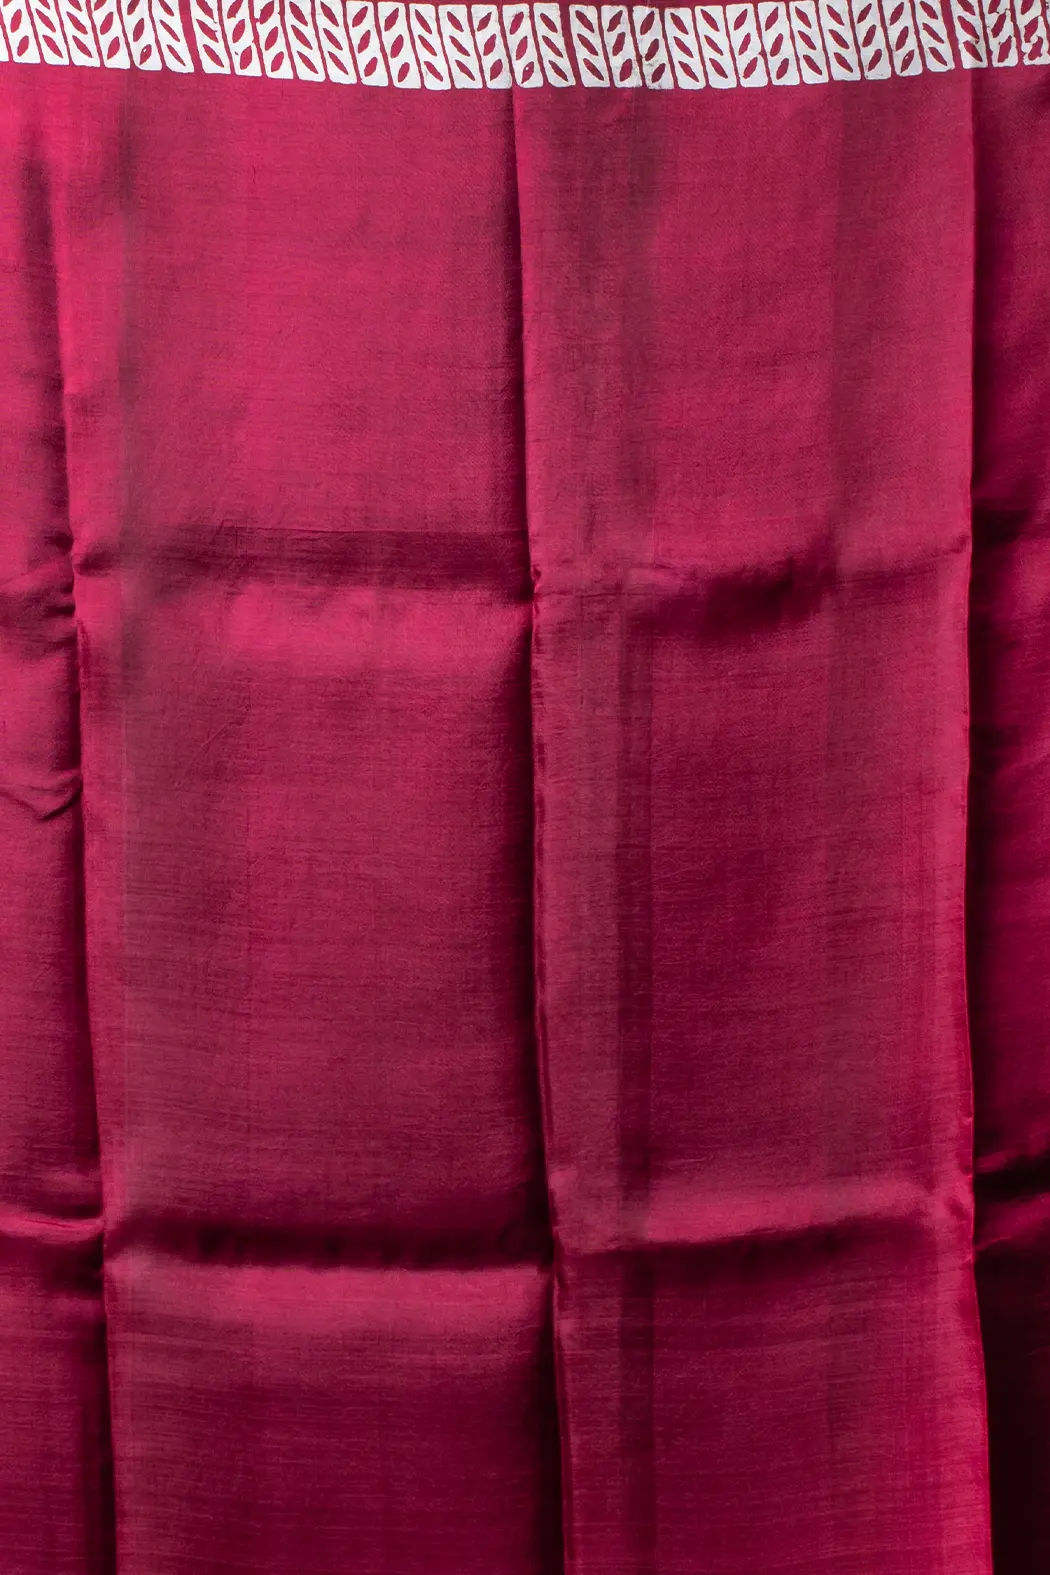 Buy this all occasion wear maroon silk saree-3 -Ramdhanu Ethnic